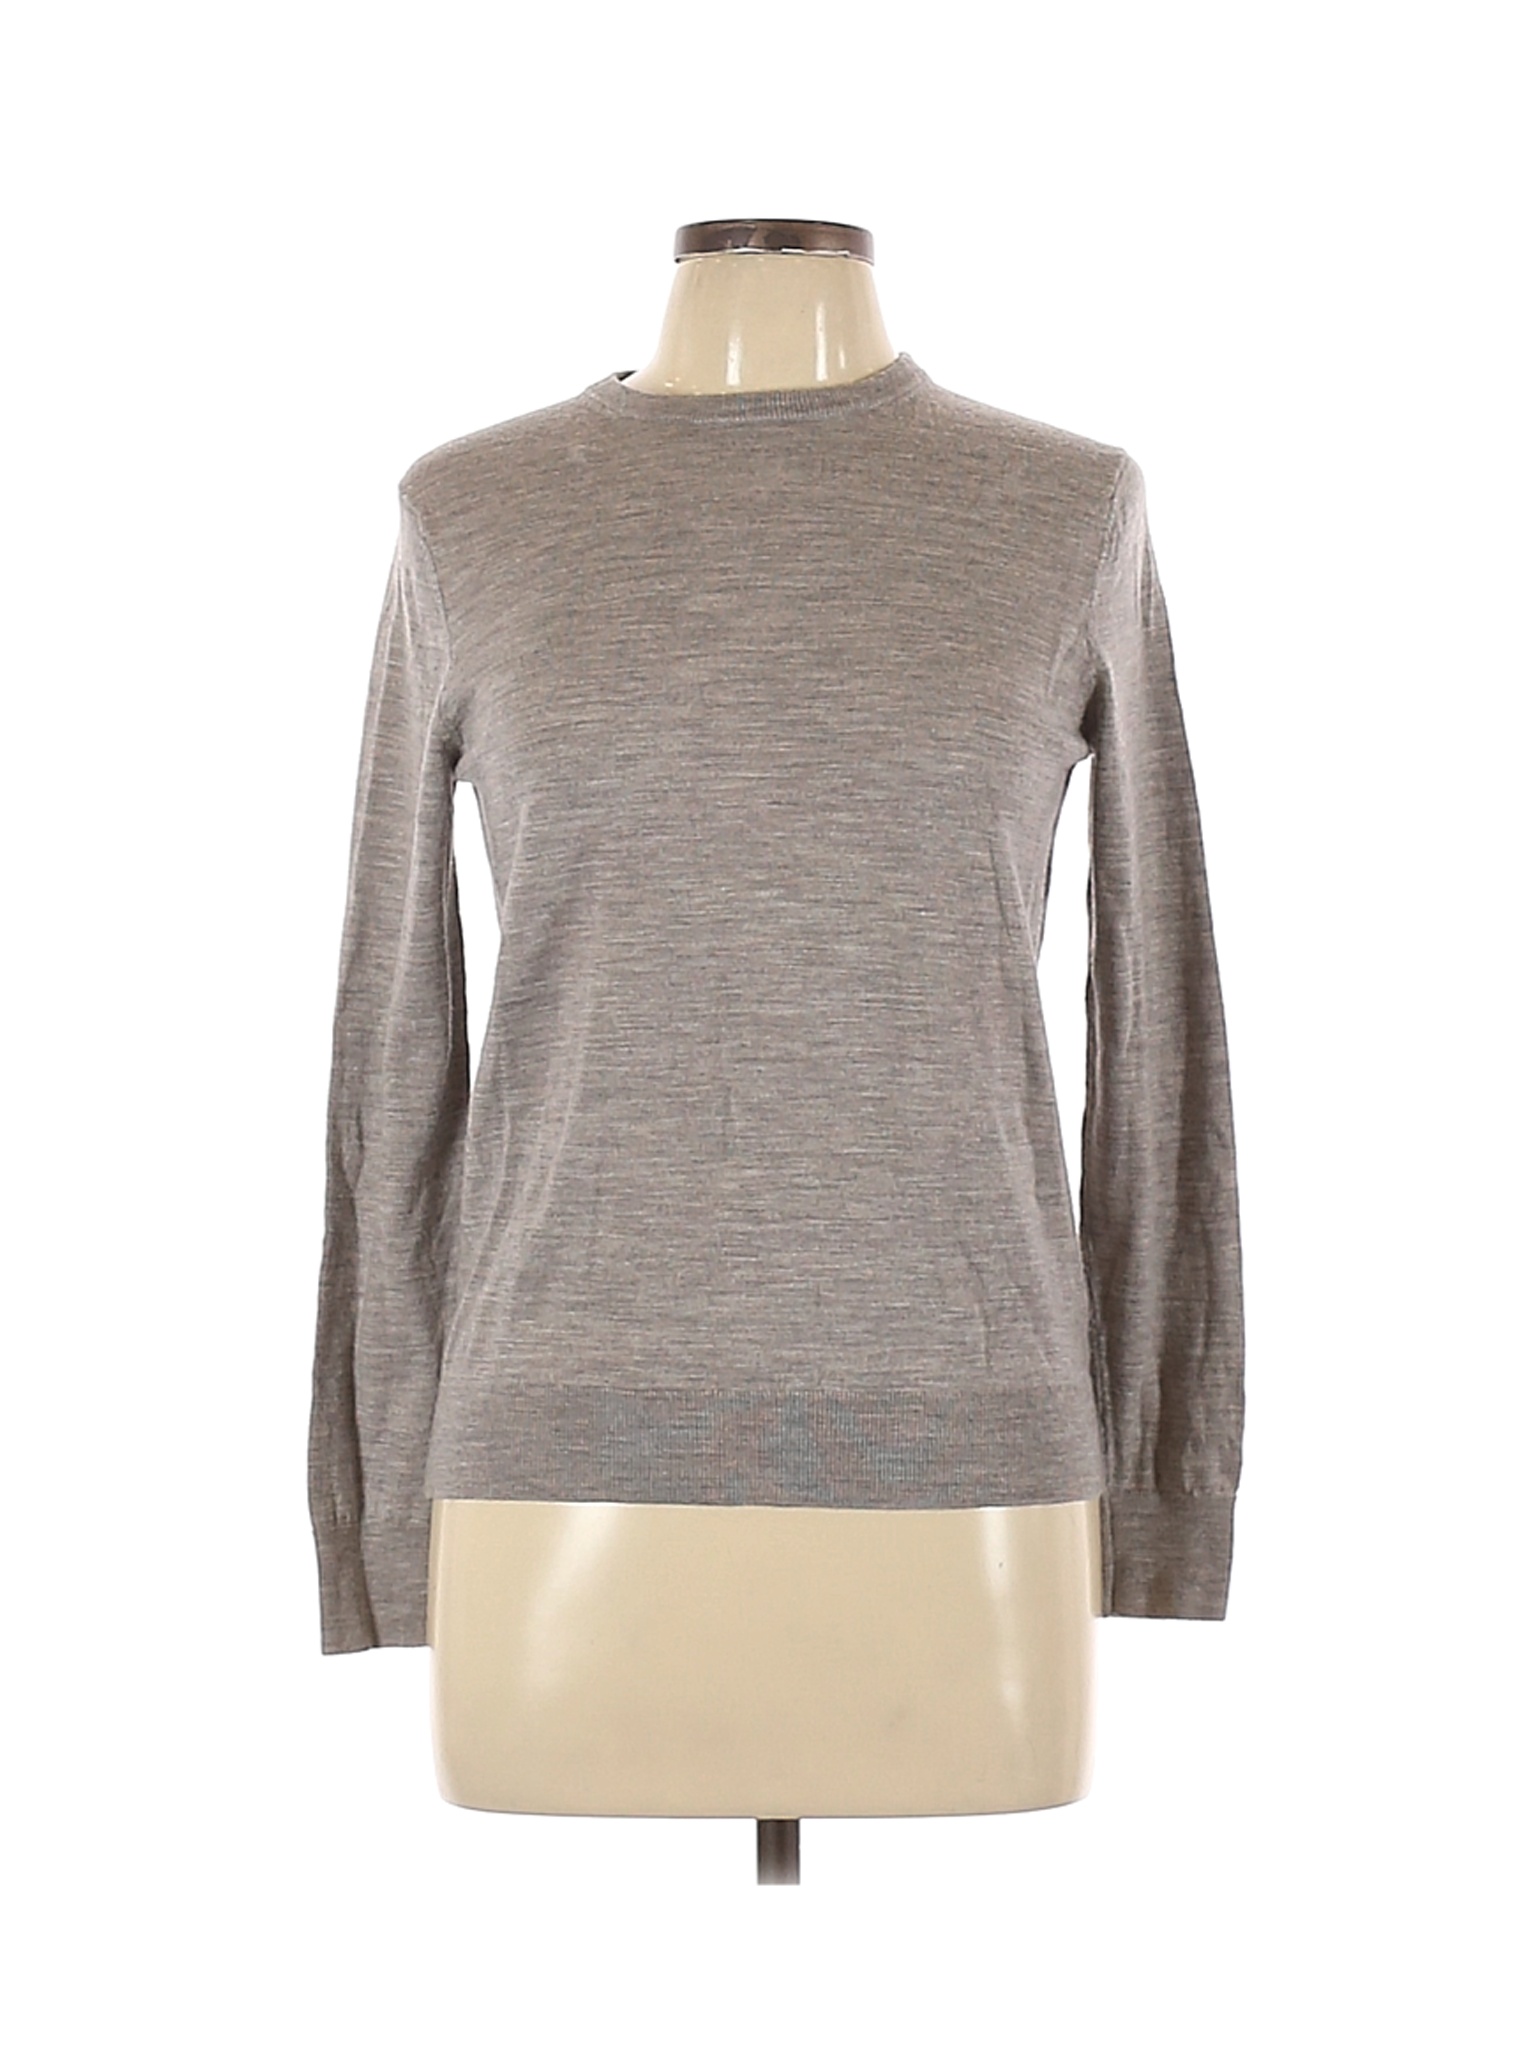 Uniqlo Women Gray Wool Pullover Sweater L | eBay